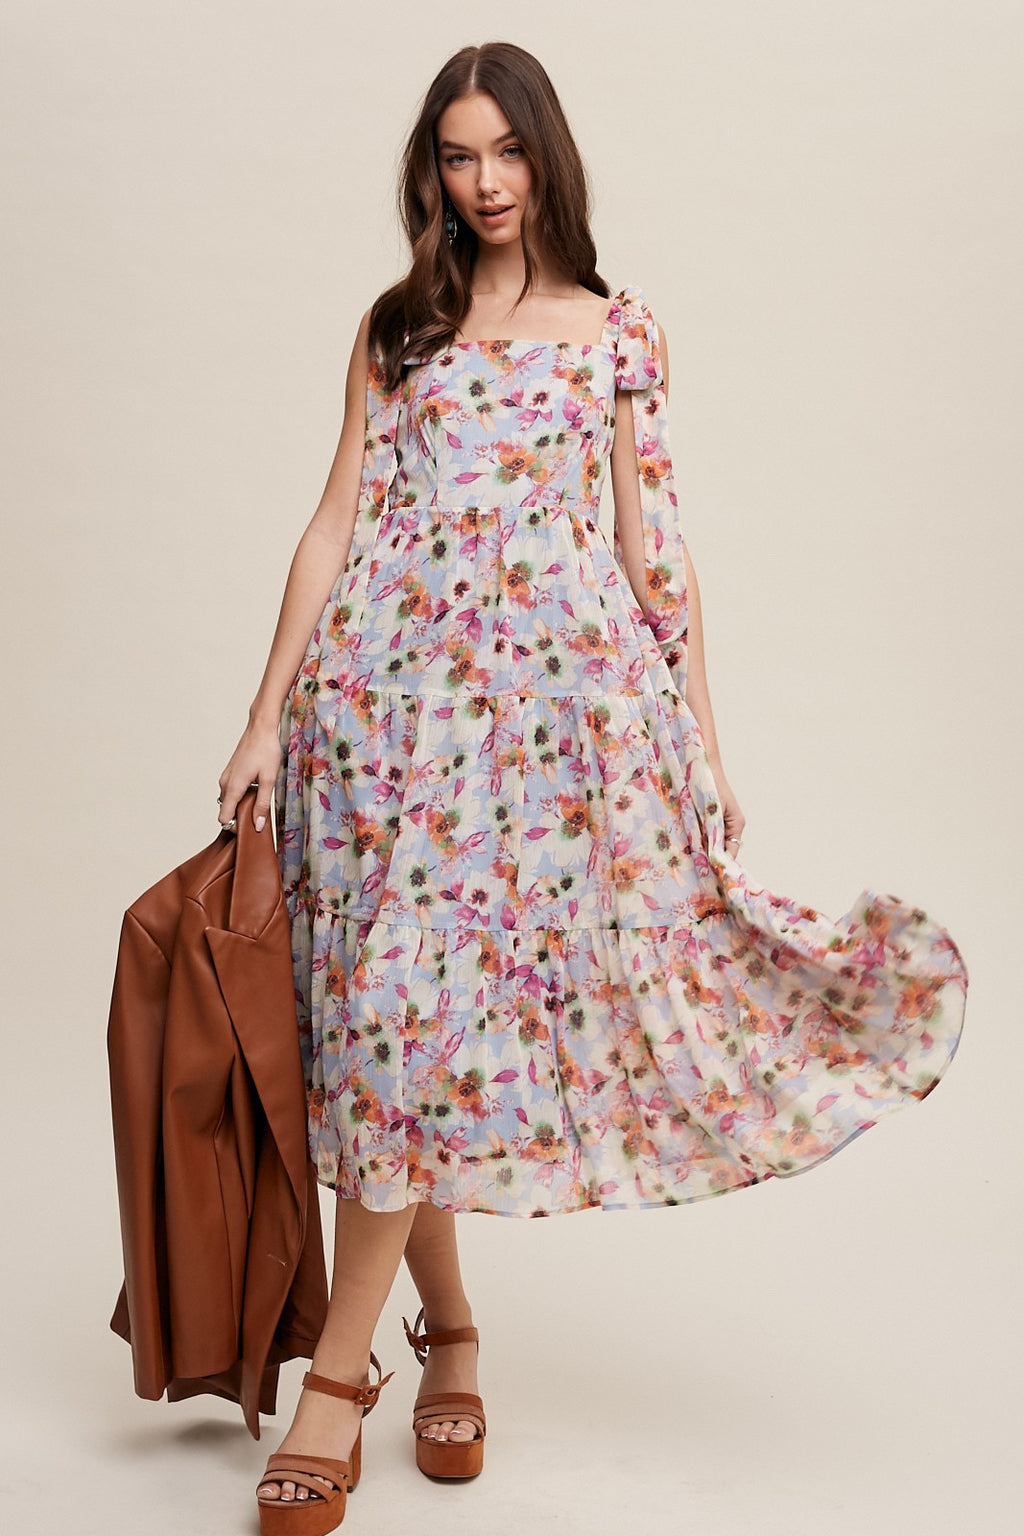 Floral Print Tie Shoulder Babydoll Maxi Dress